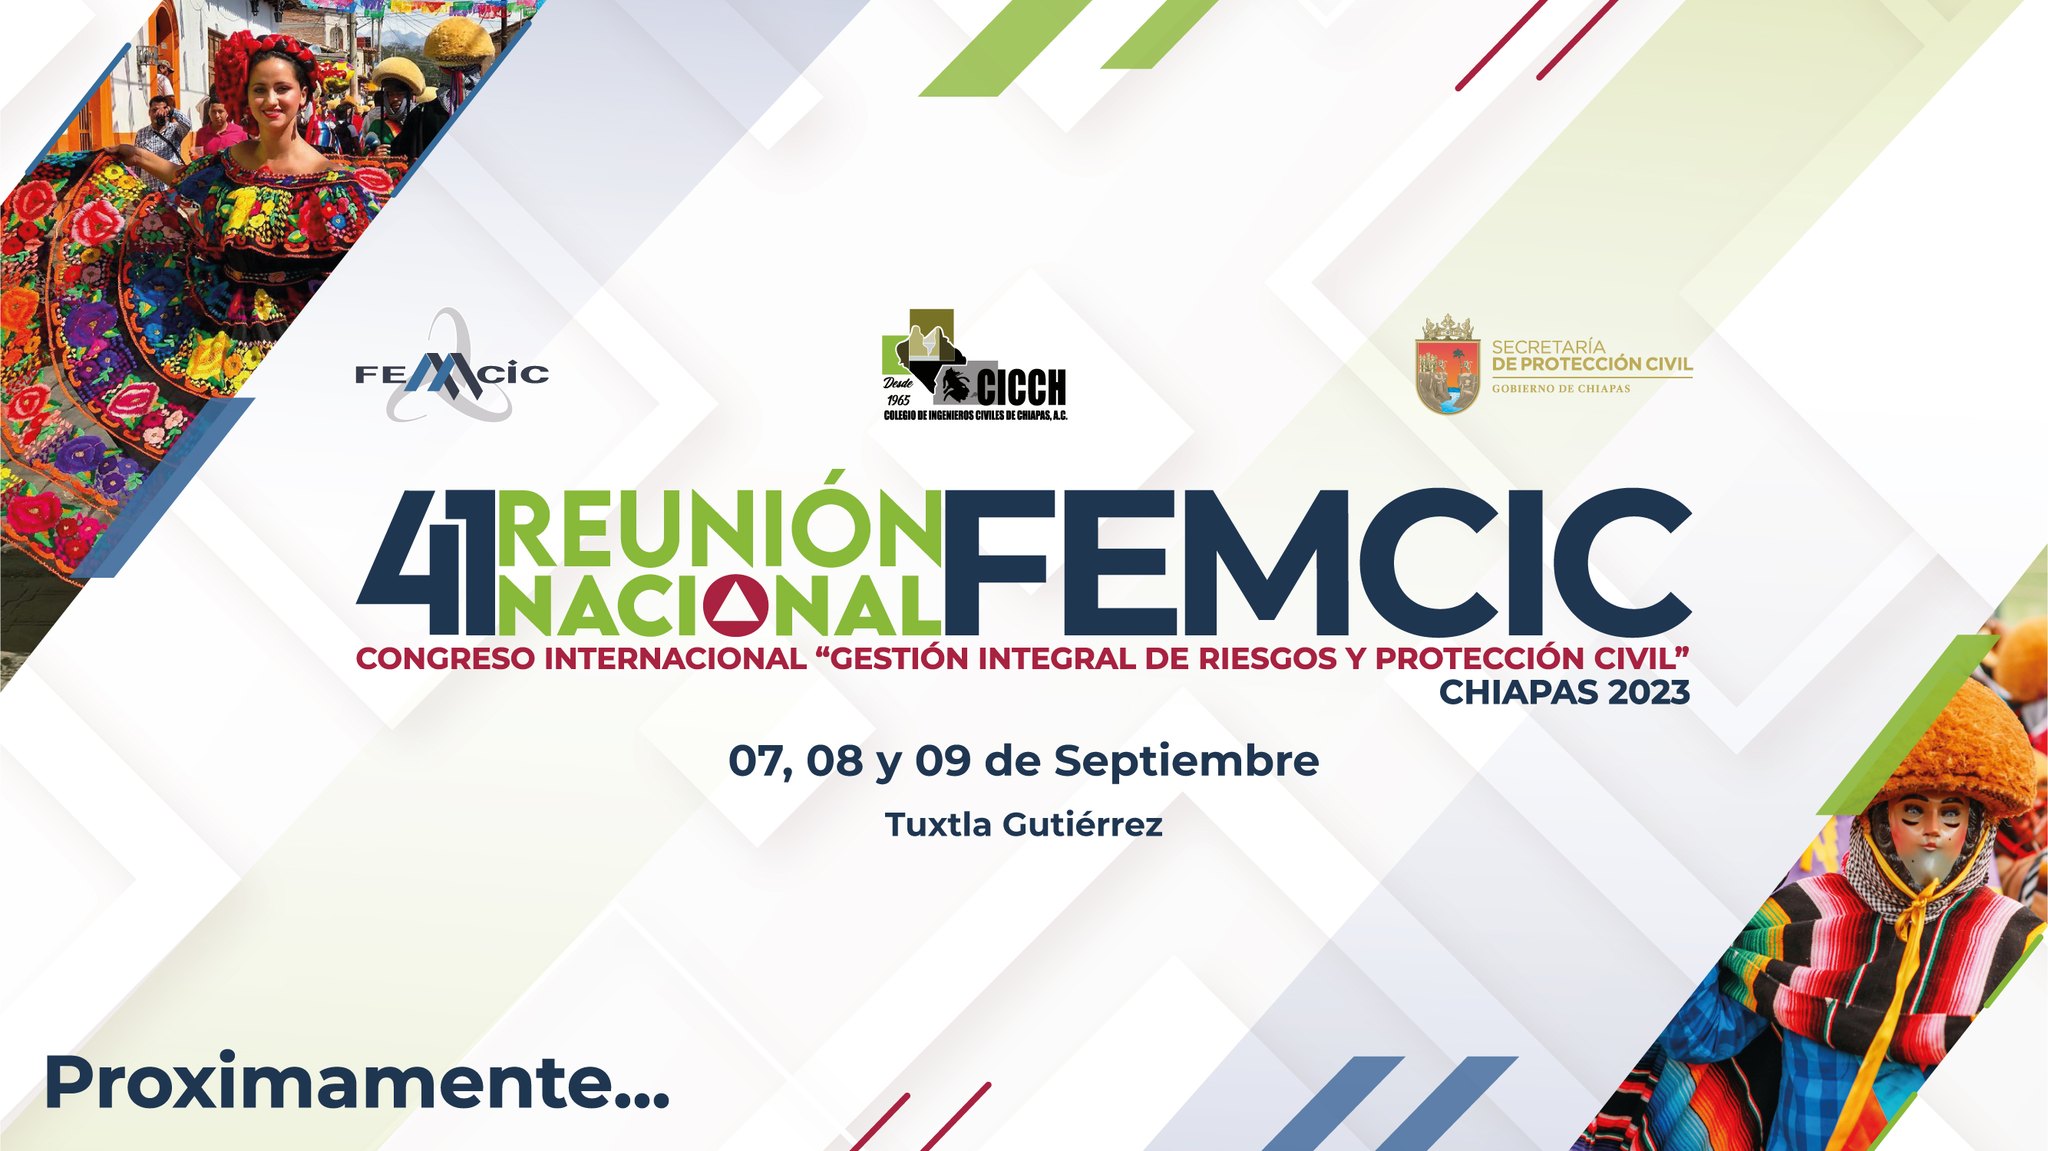 41 Reunión Nacional FEMCIC con sede en Chiapas